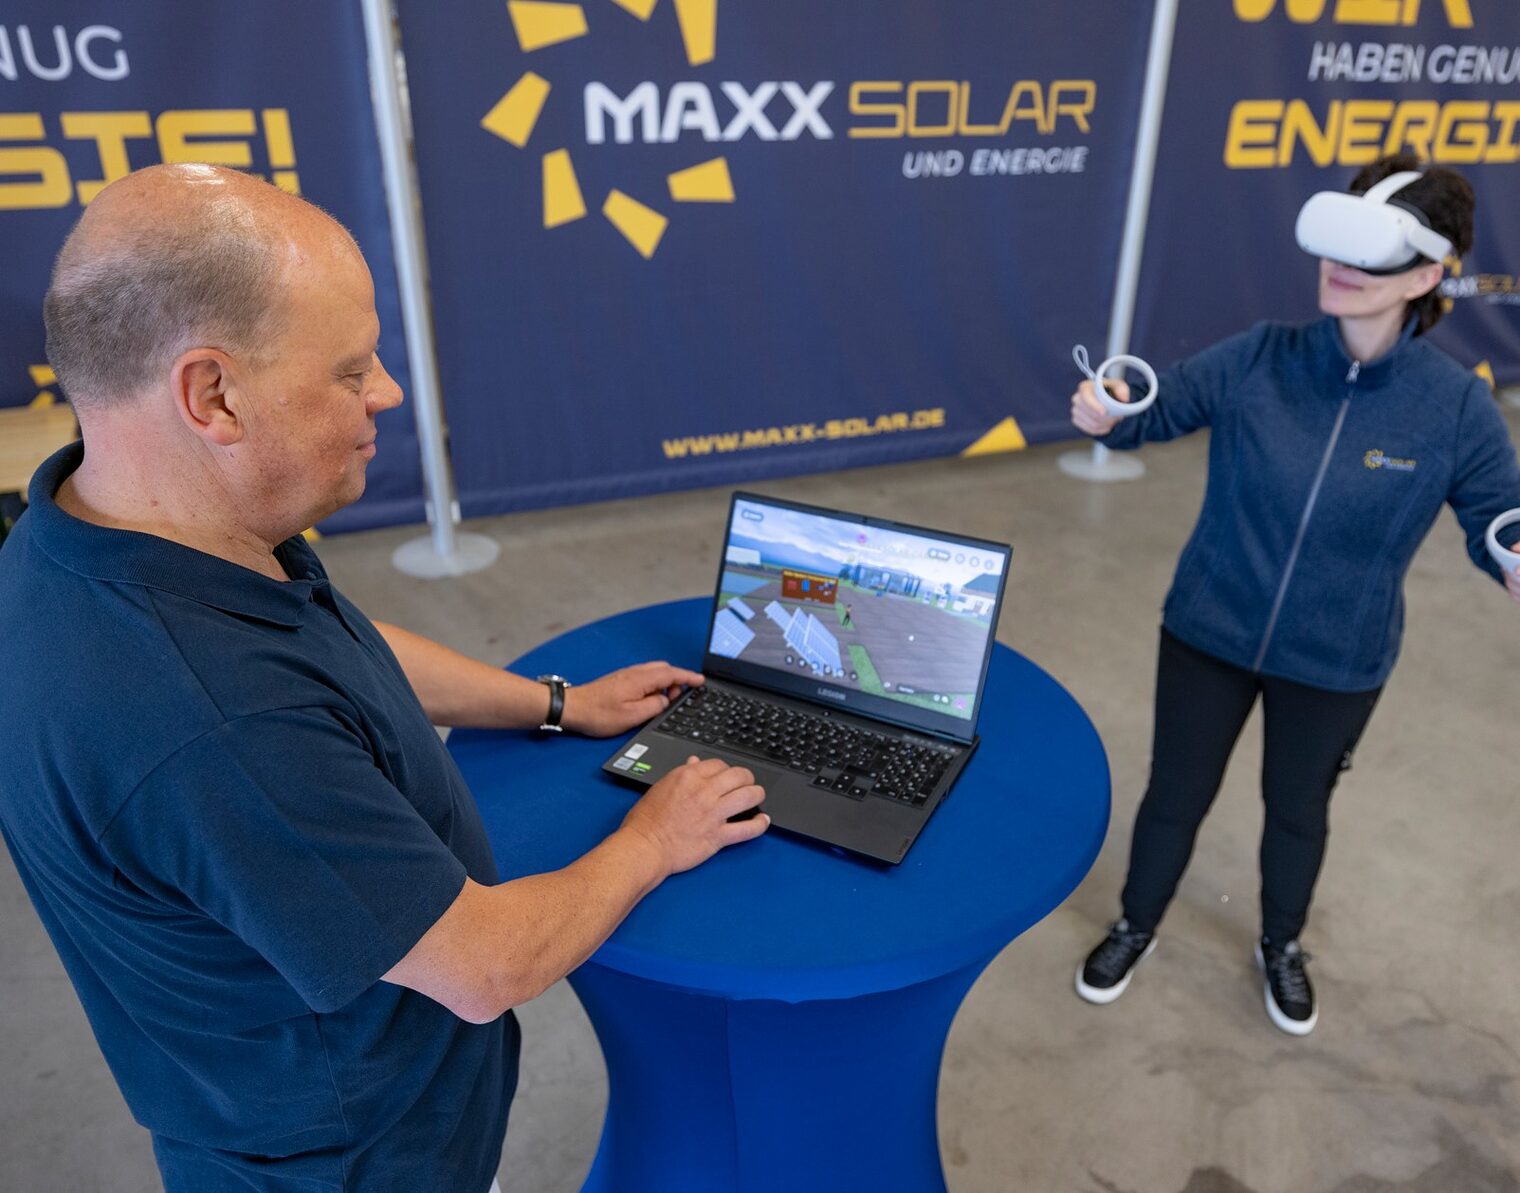 Maxx Solar